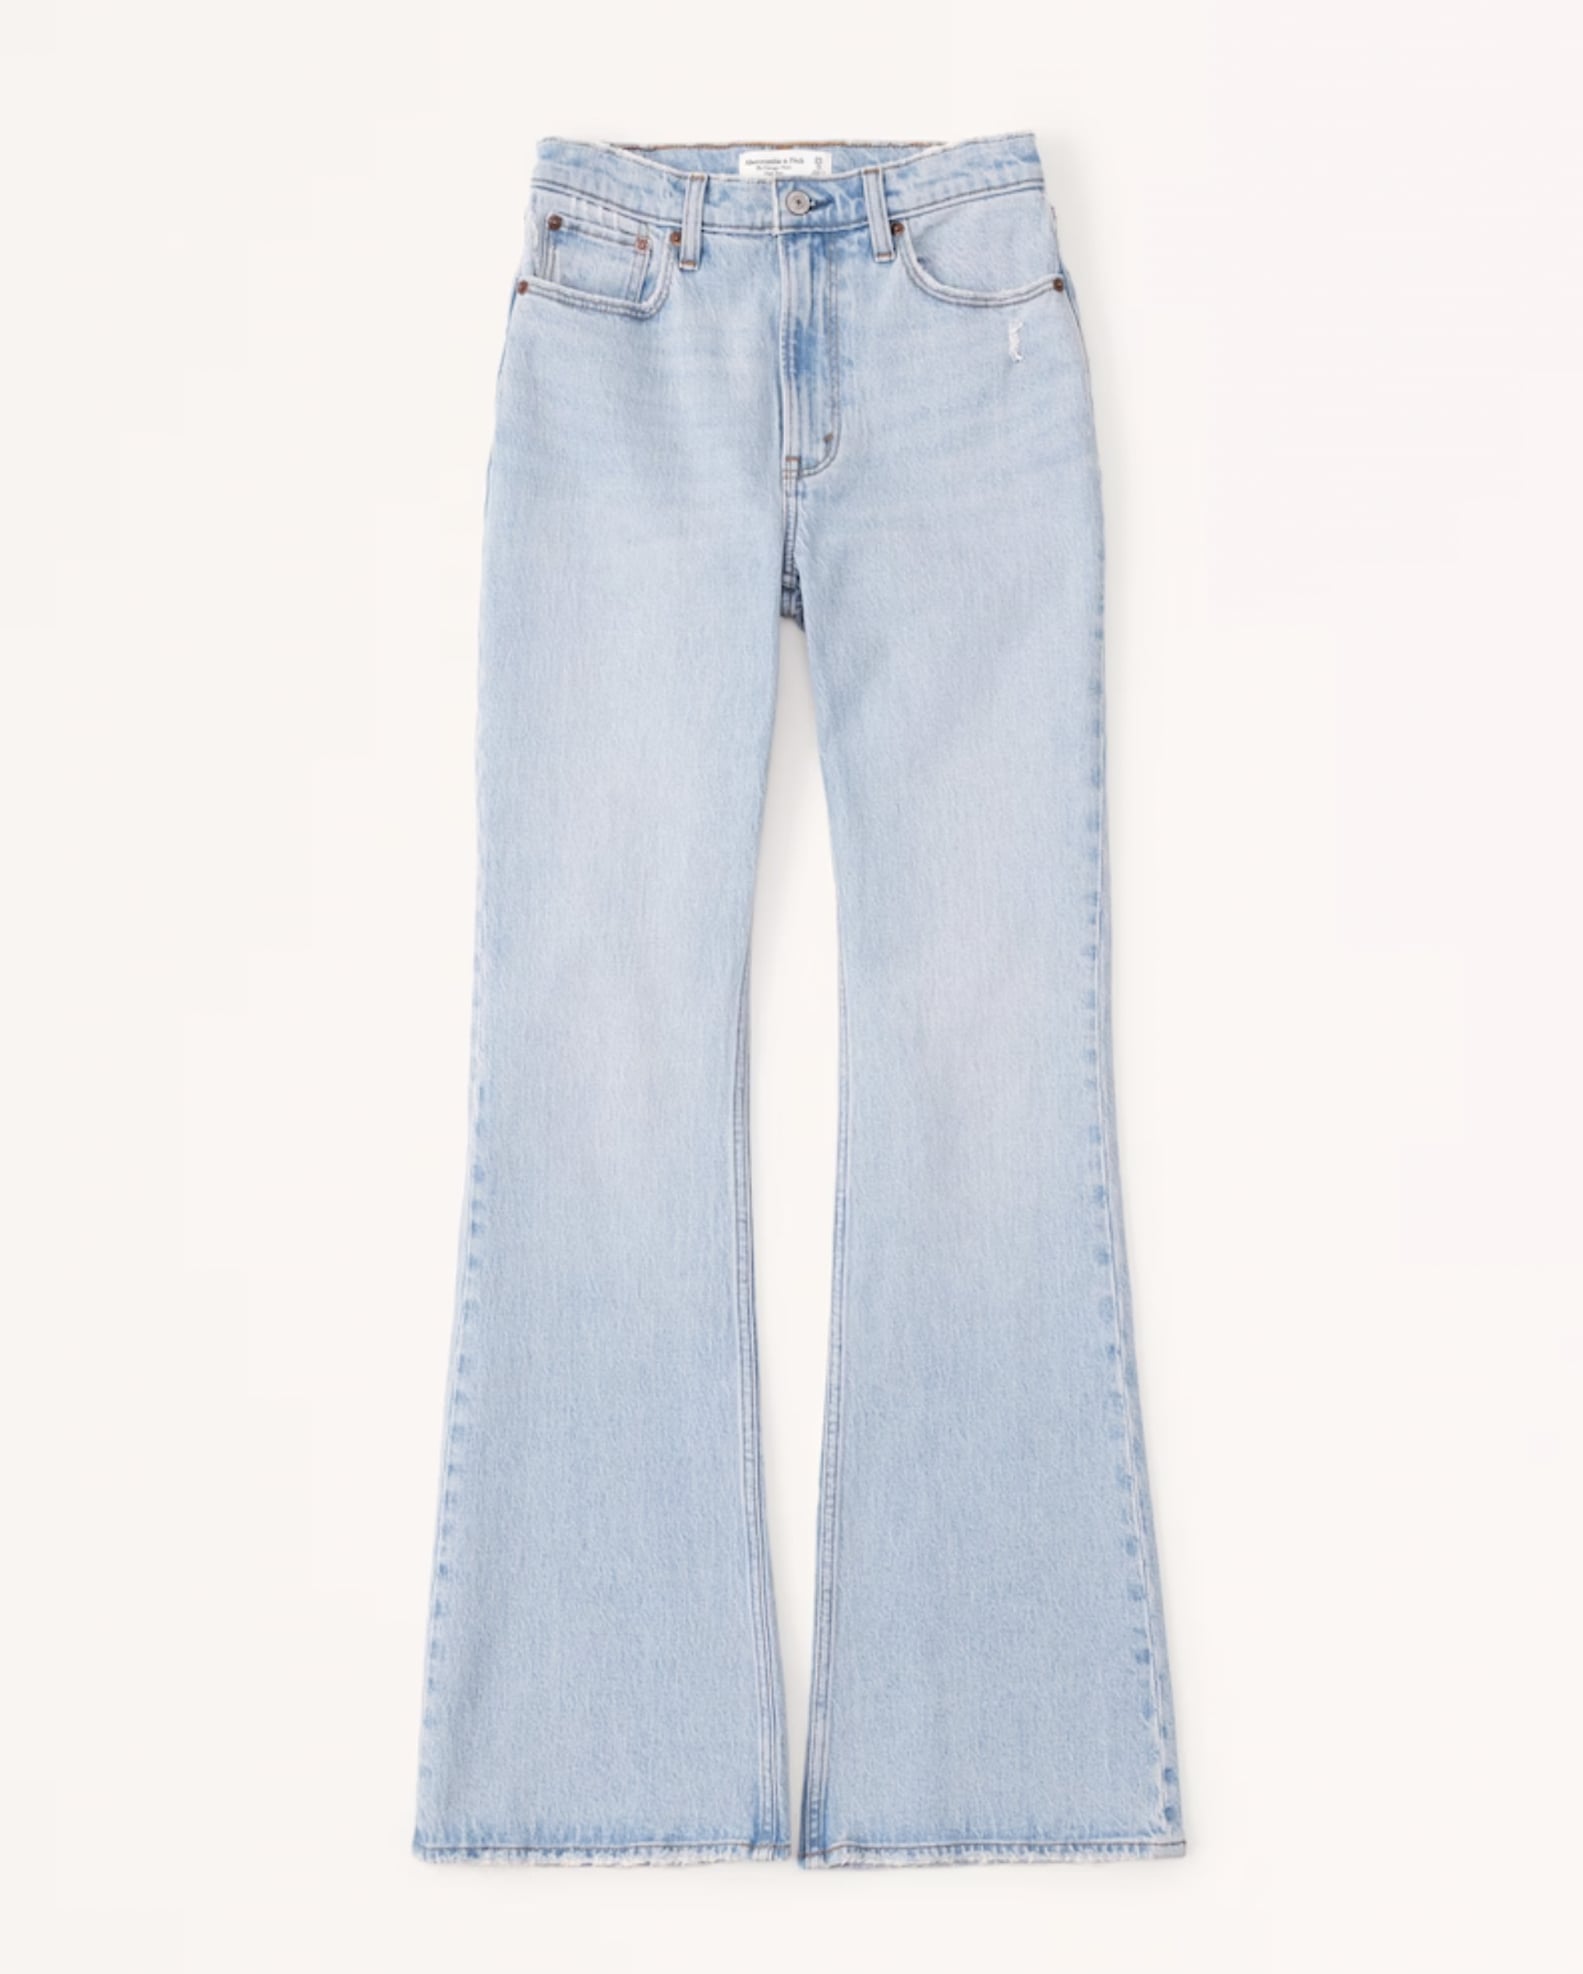 The Best Flare Jeans For Petites | POPSUGAR Fashion